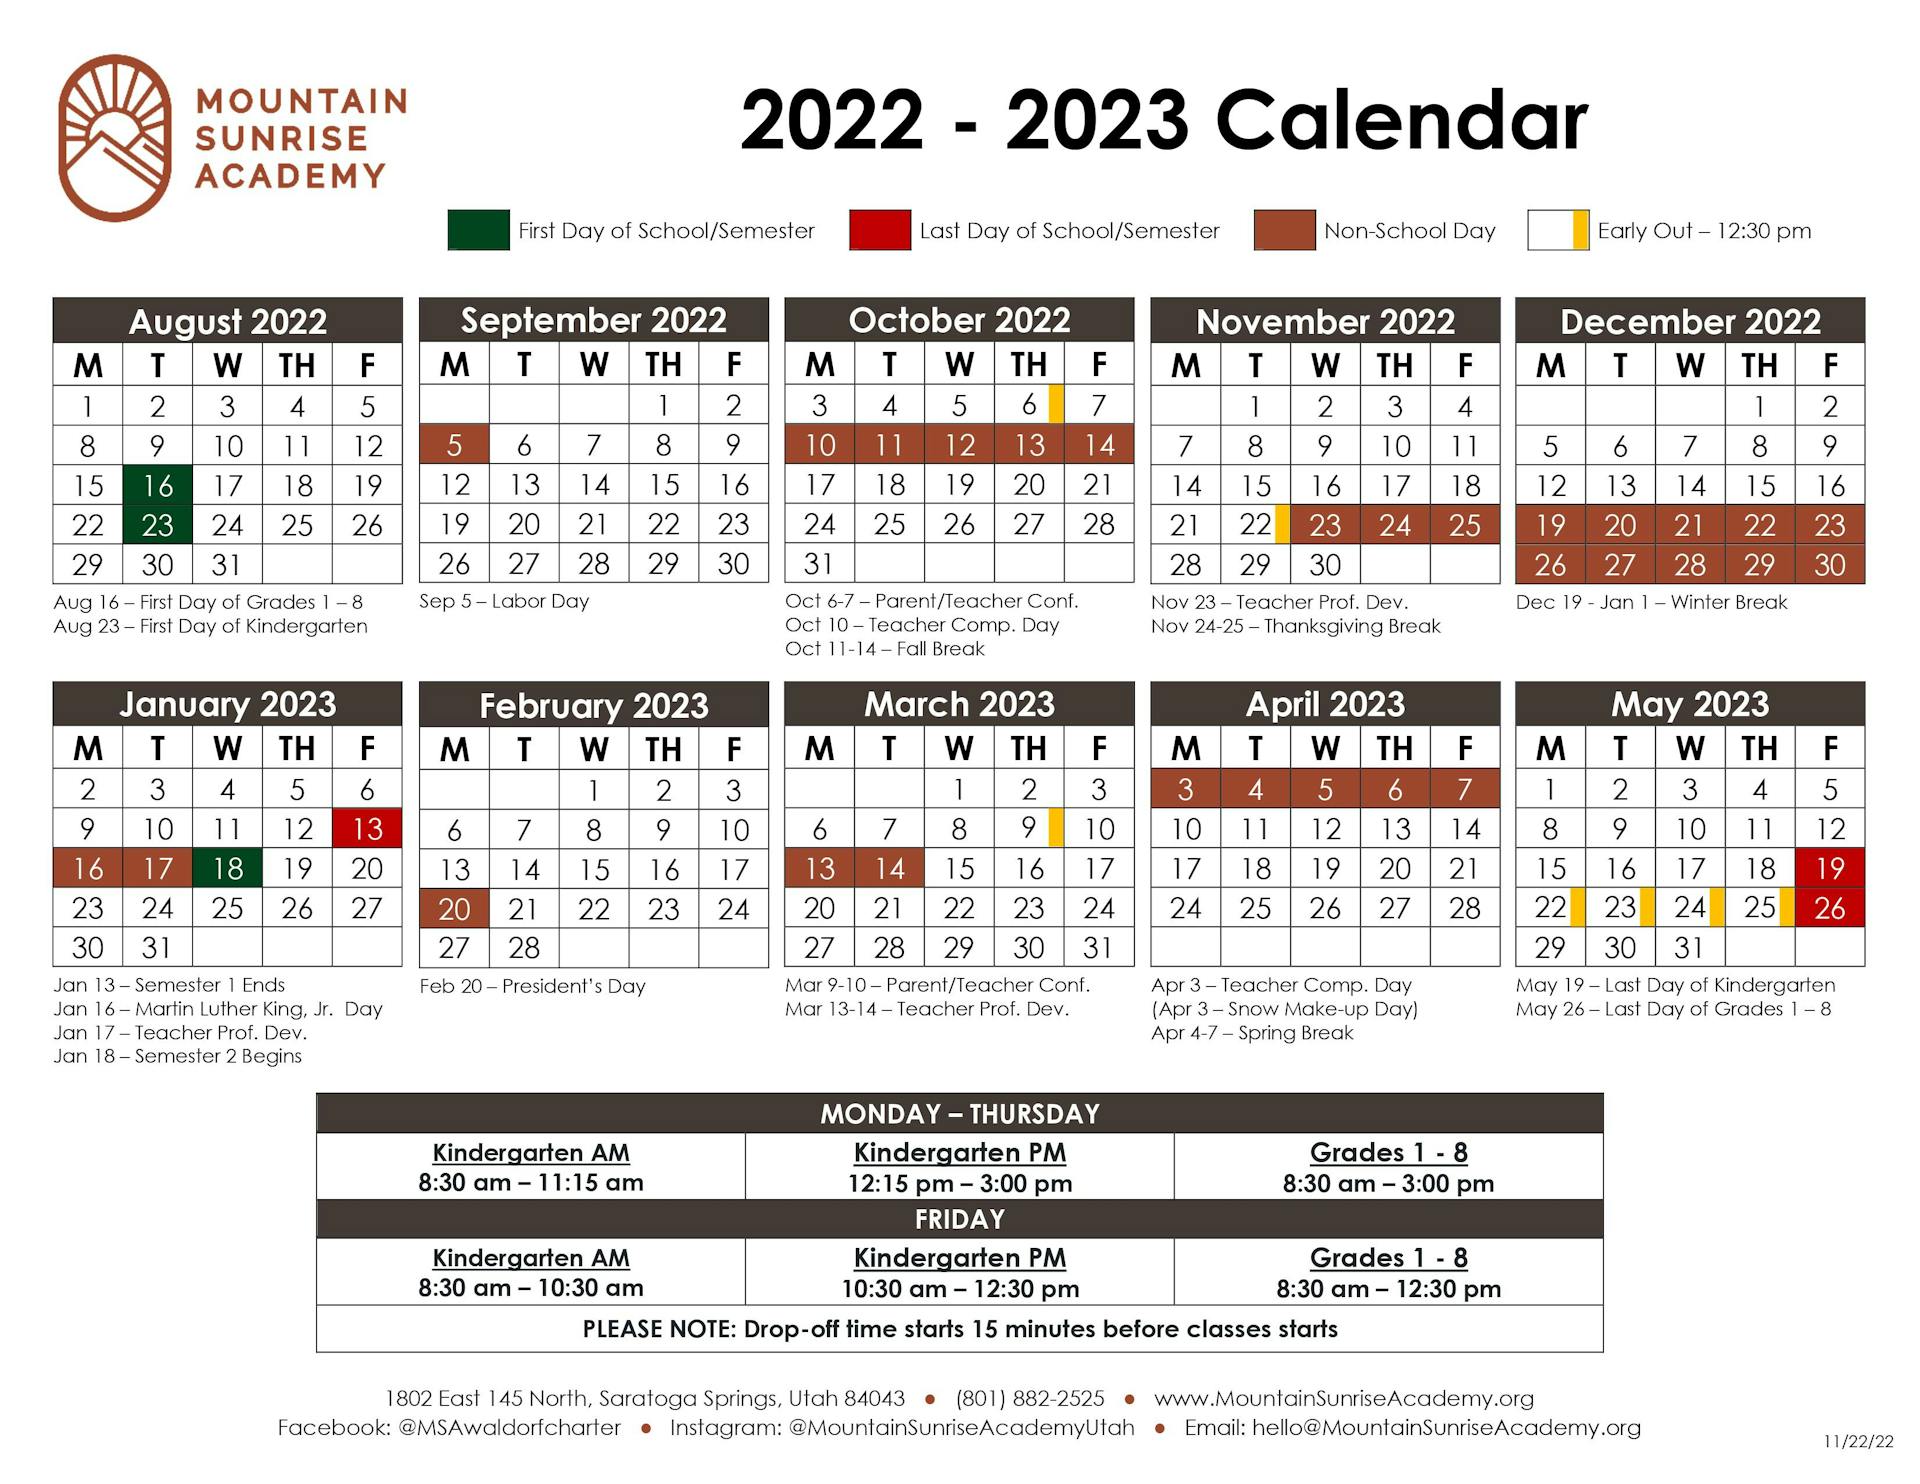  2022-2023 Academic Calendar 